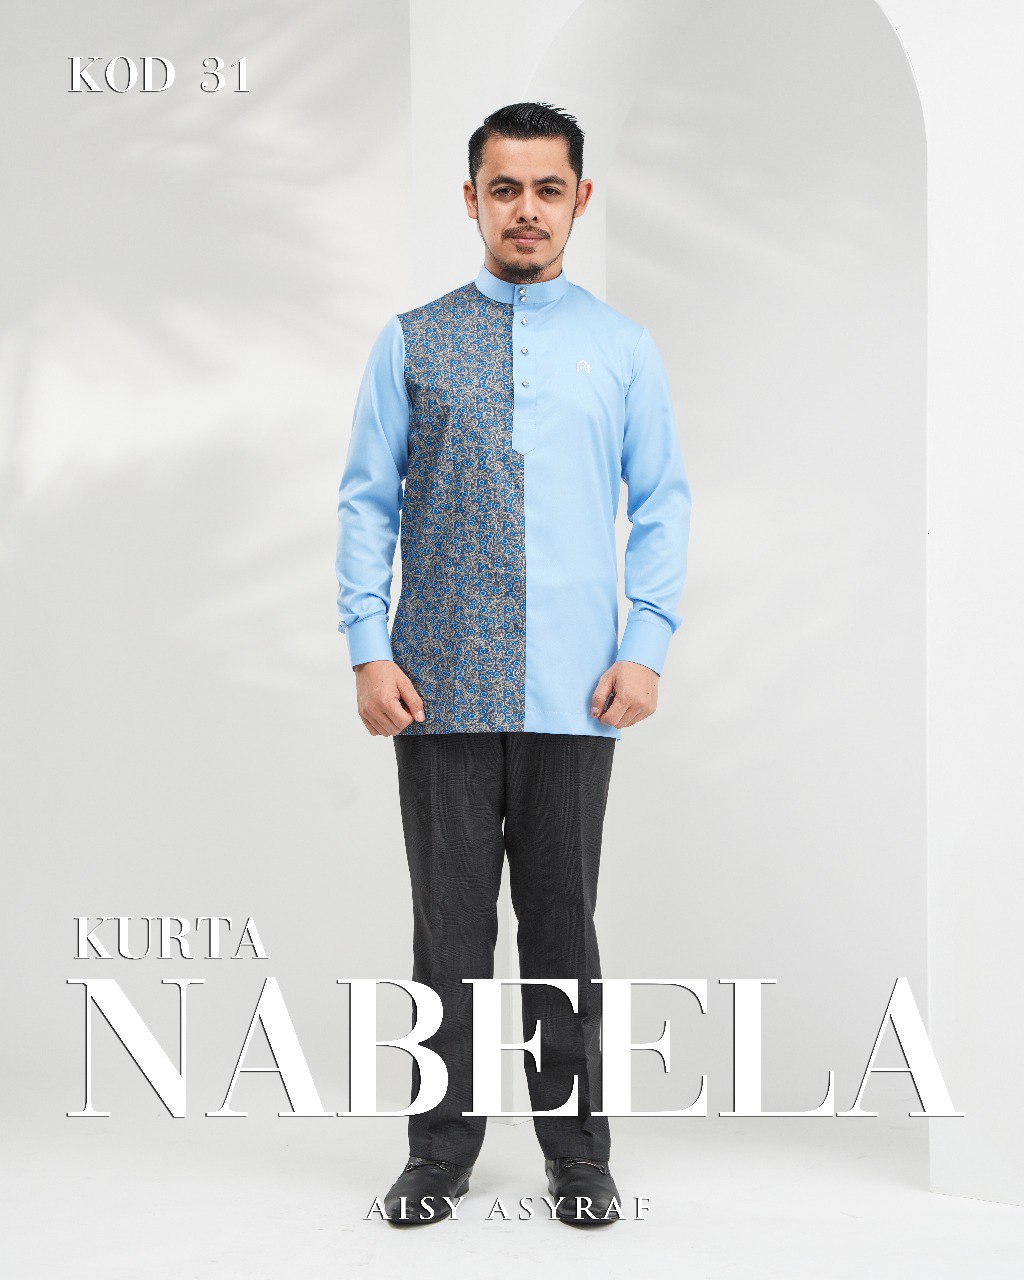 Kurta Nabeela - Kod 31 (Cinderella Blue)  - NEW RELEASE